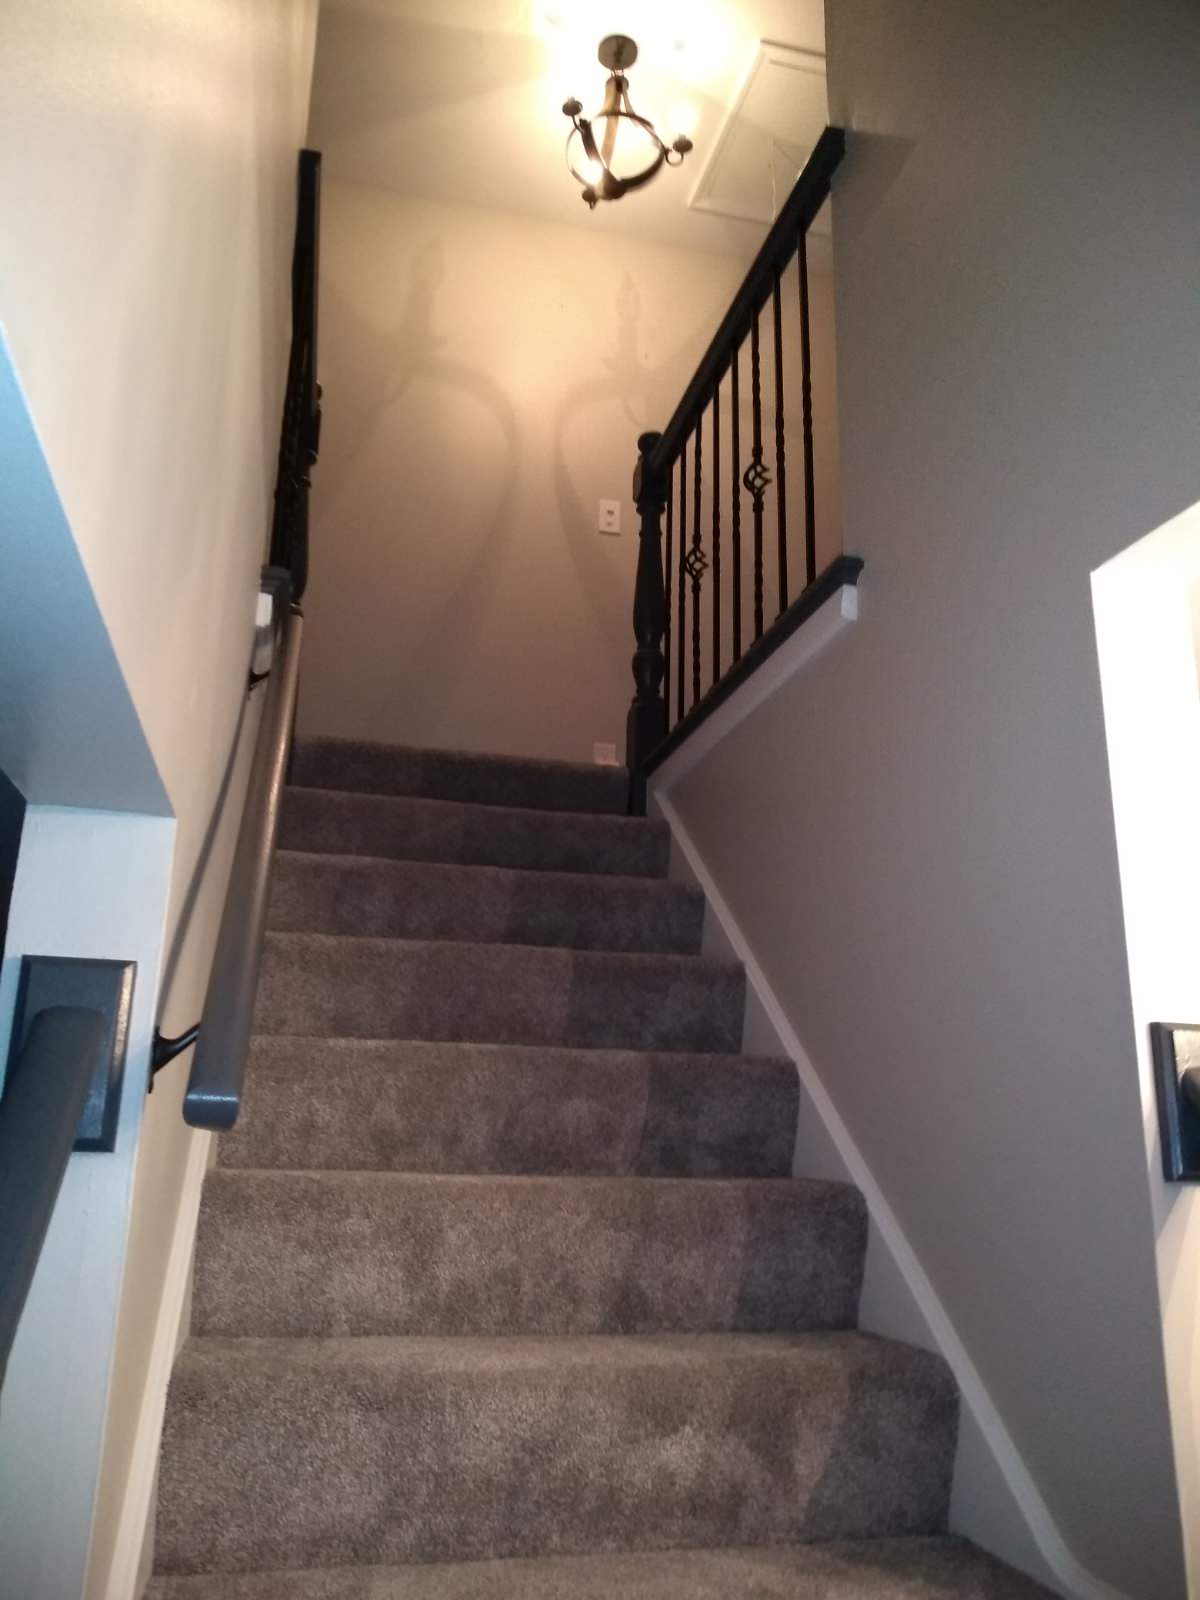 Modernized stairs - contemporary gray